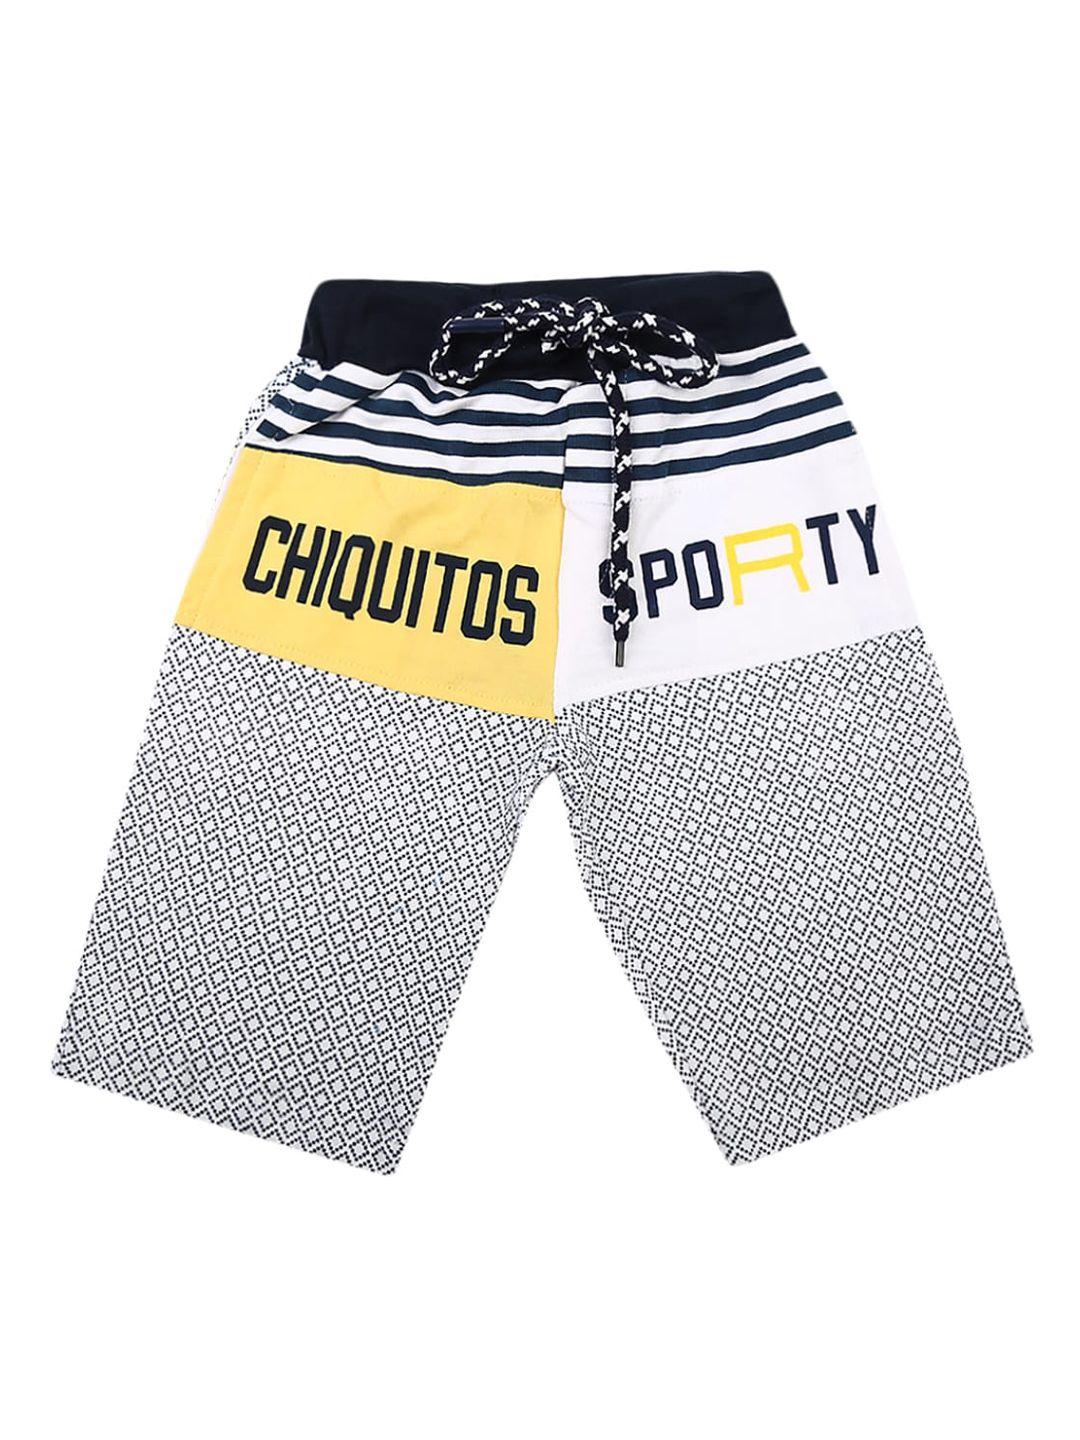 v-mart boys navy blue & white geometric printed cotton shorts